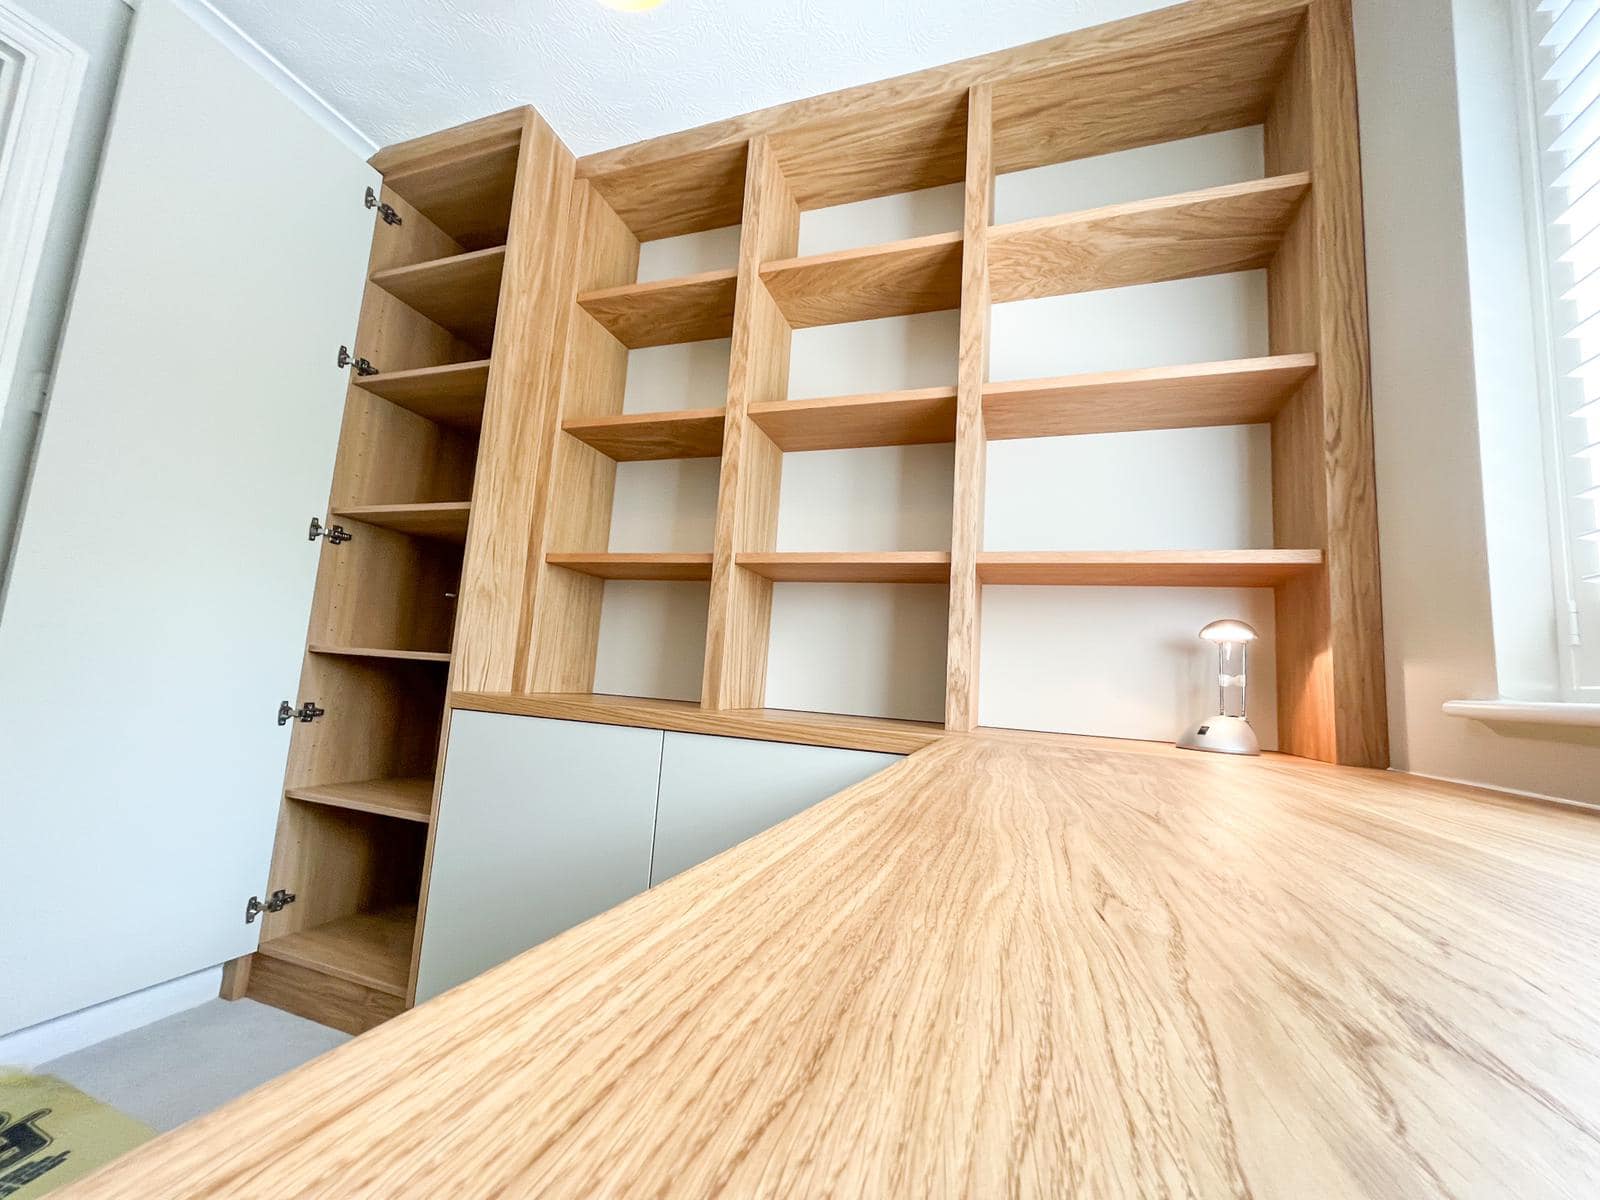 Oak veneered home office built in shelf and desk